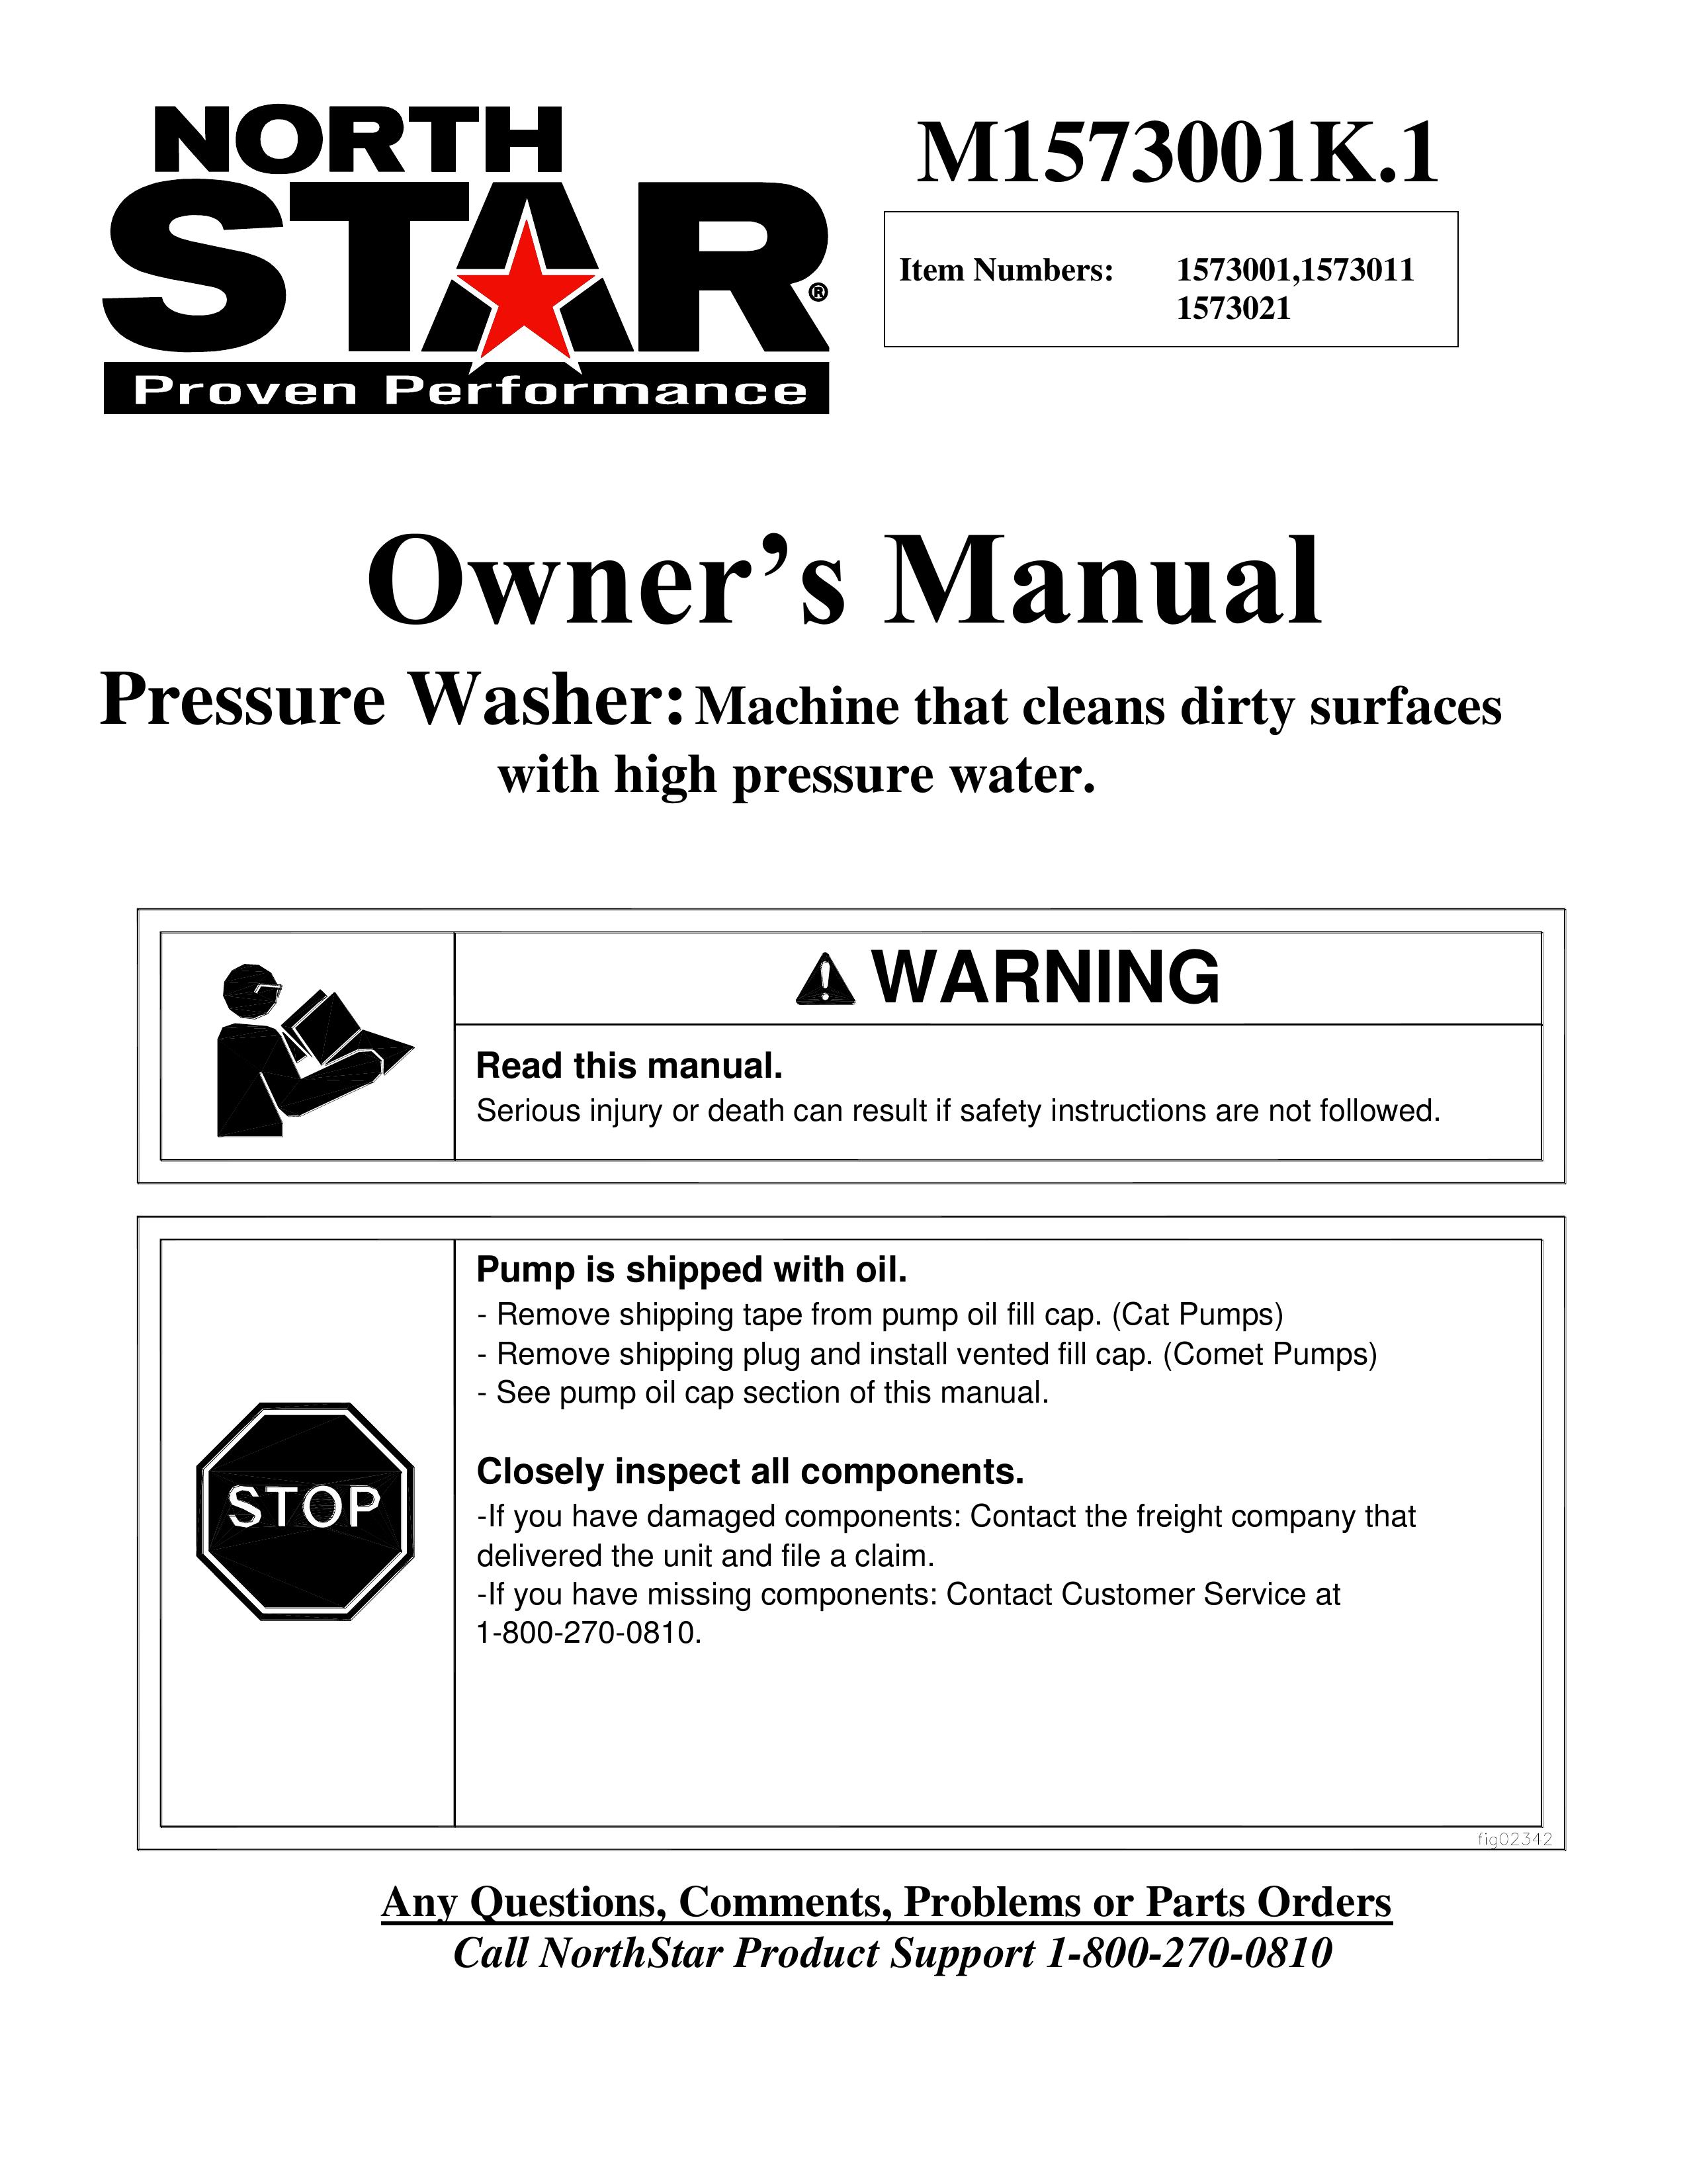 North Star M1573001K.1 Pressure Washer User Manual